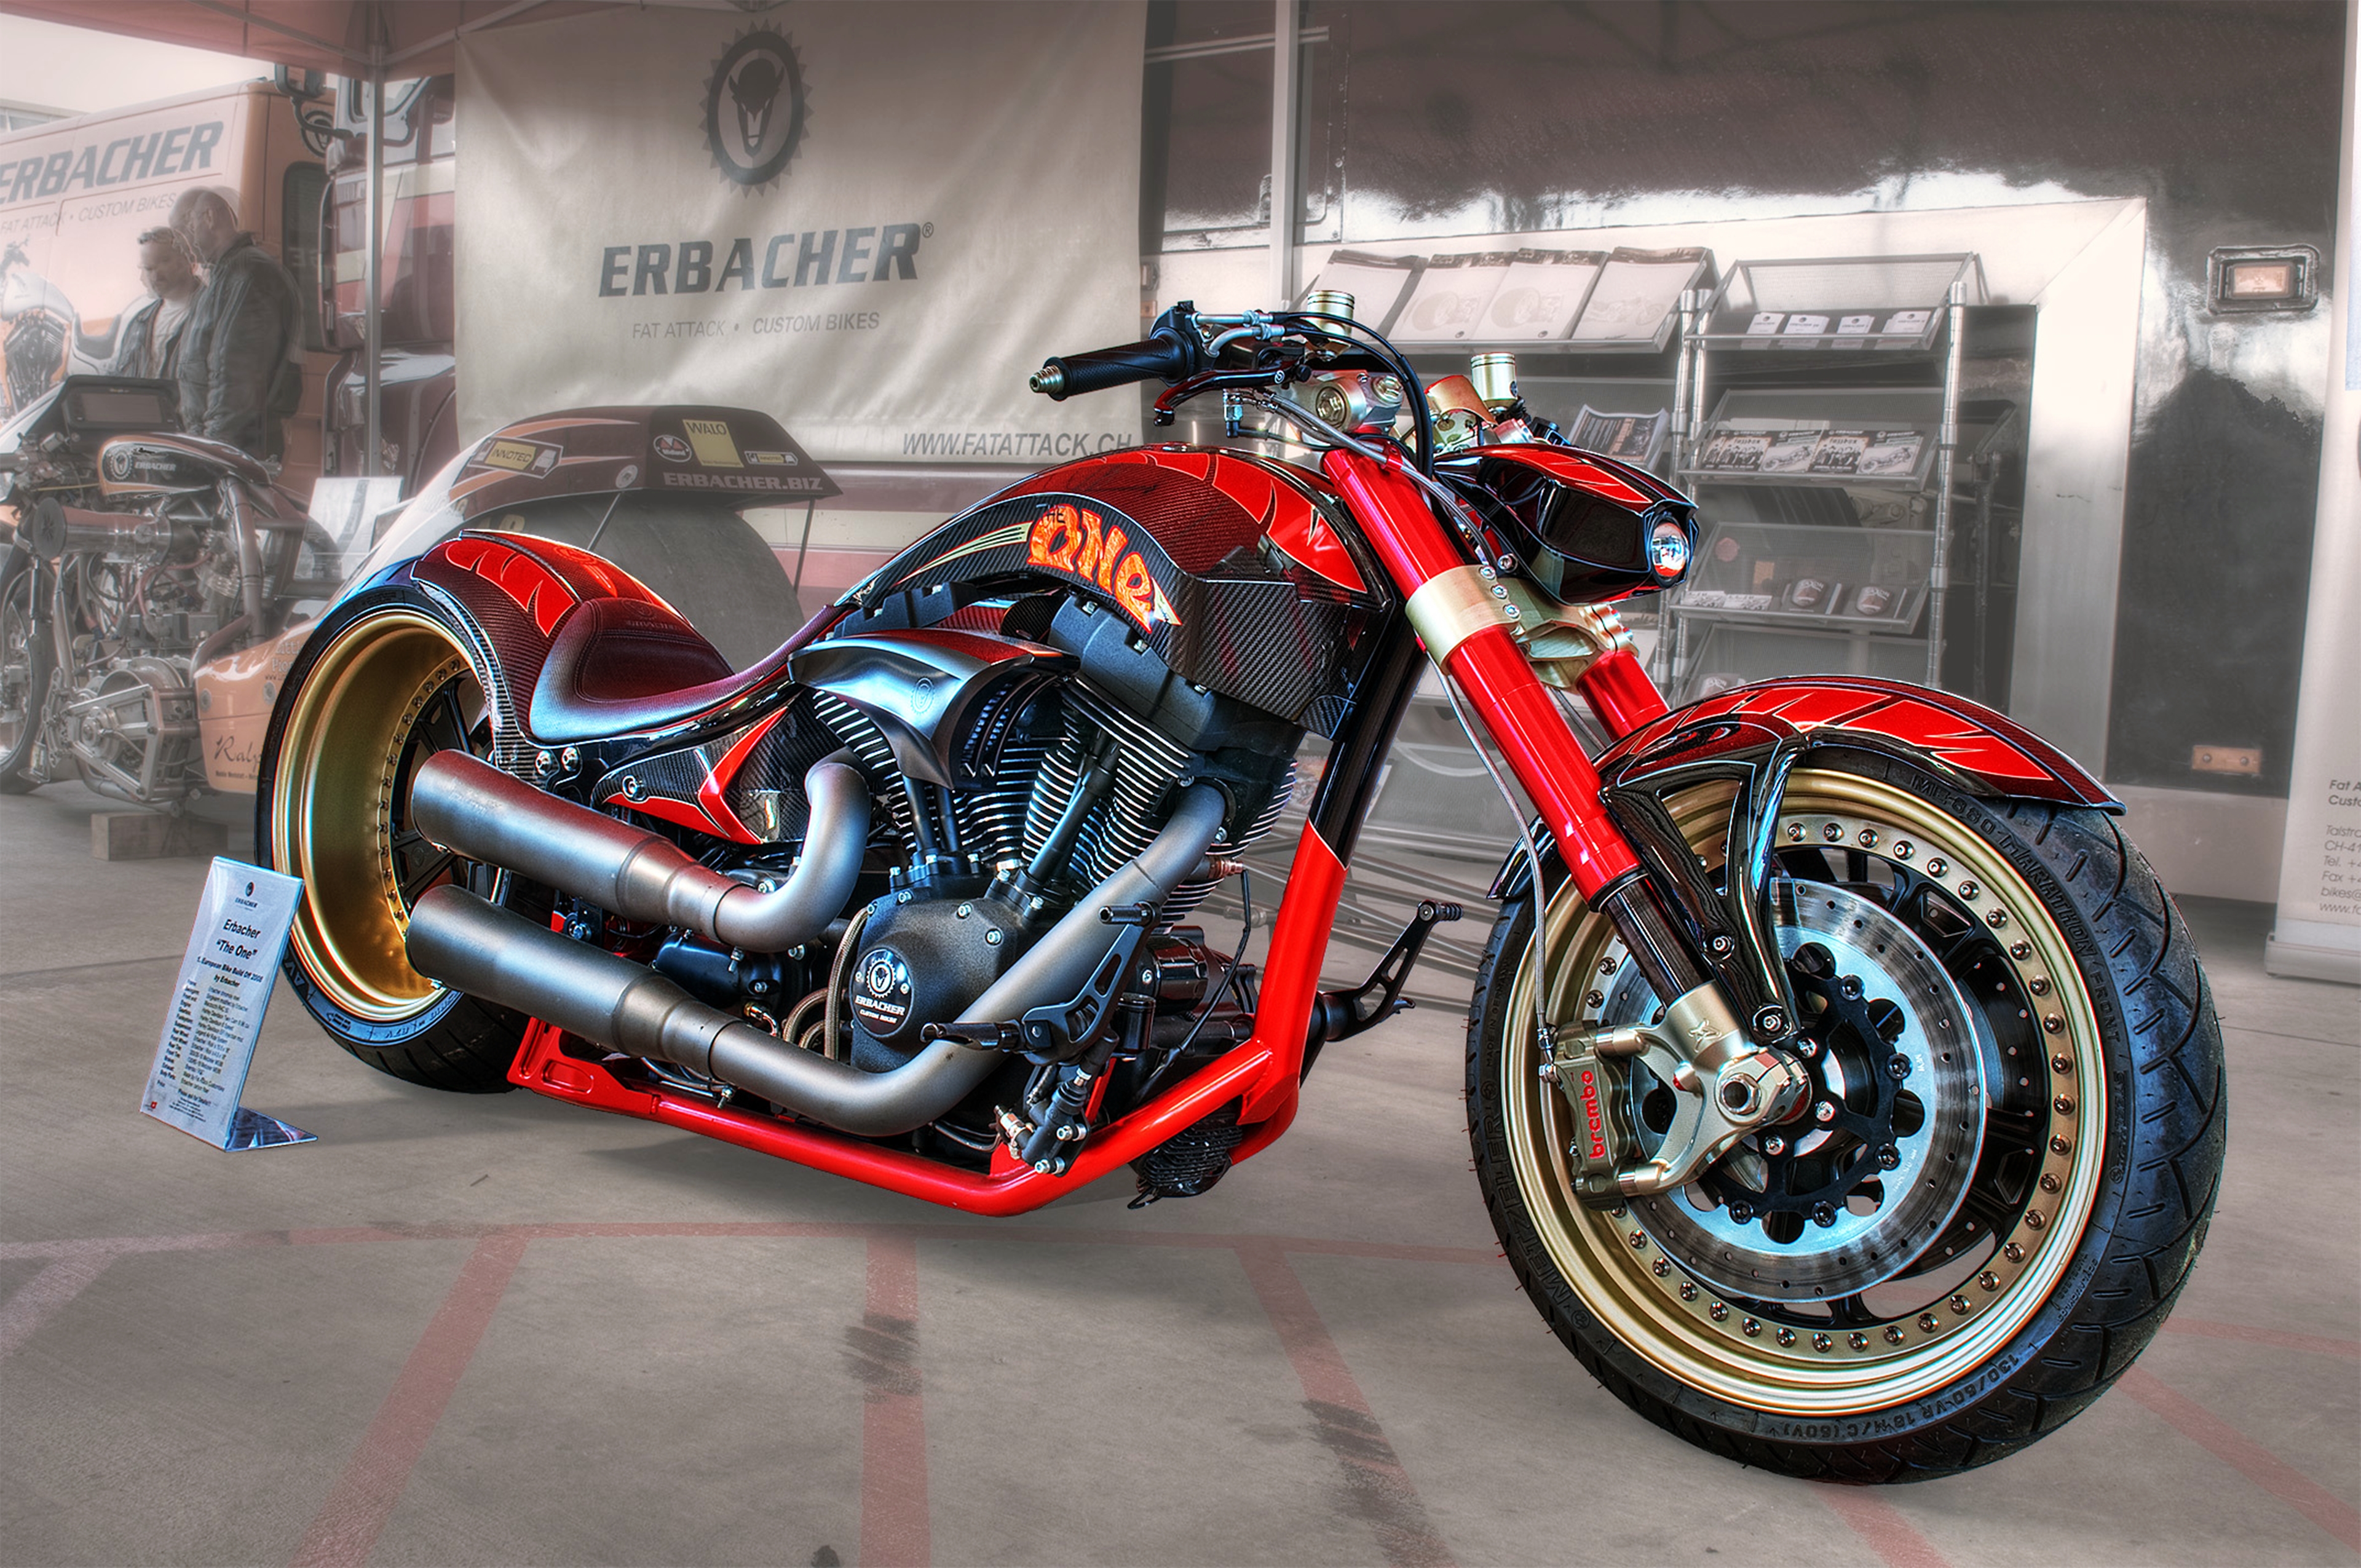 Download mobile wallpaper Motorcycle, Bike, Harley Davidson, Vehicles, Erbacher 